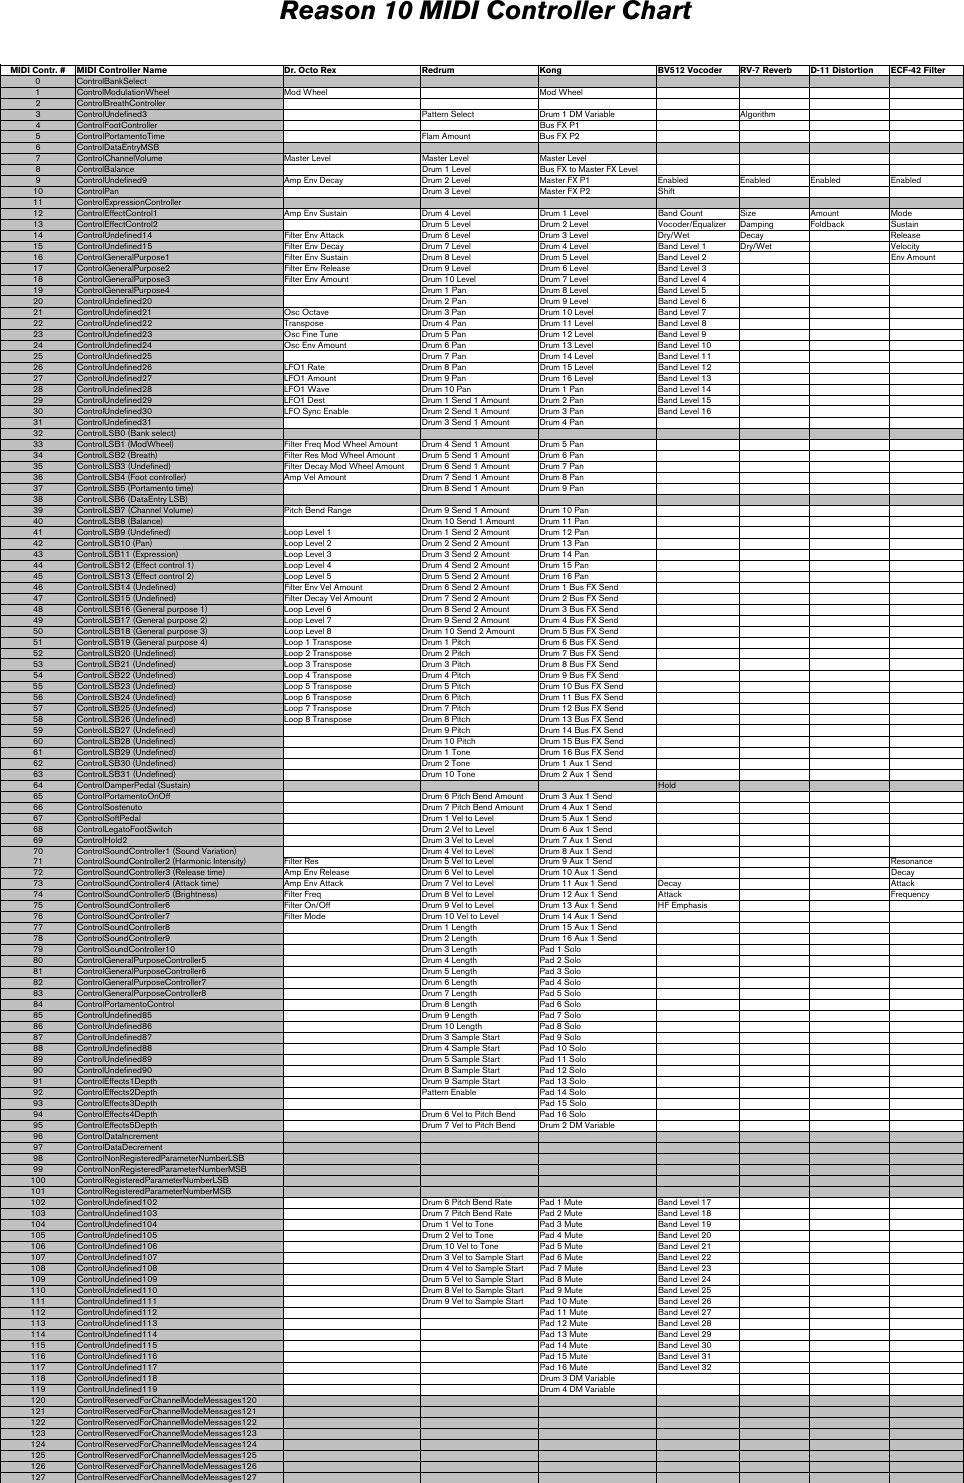 Page 6 of 9 - Reason 10 MIDI Implementation Chart - 10.0 EN